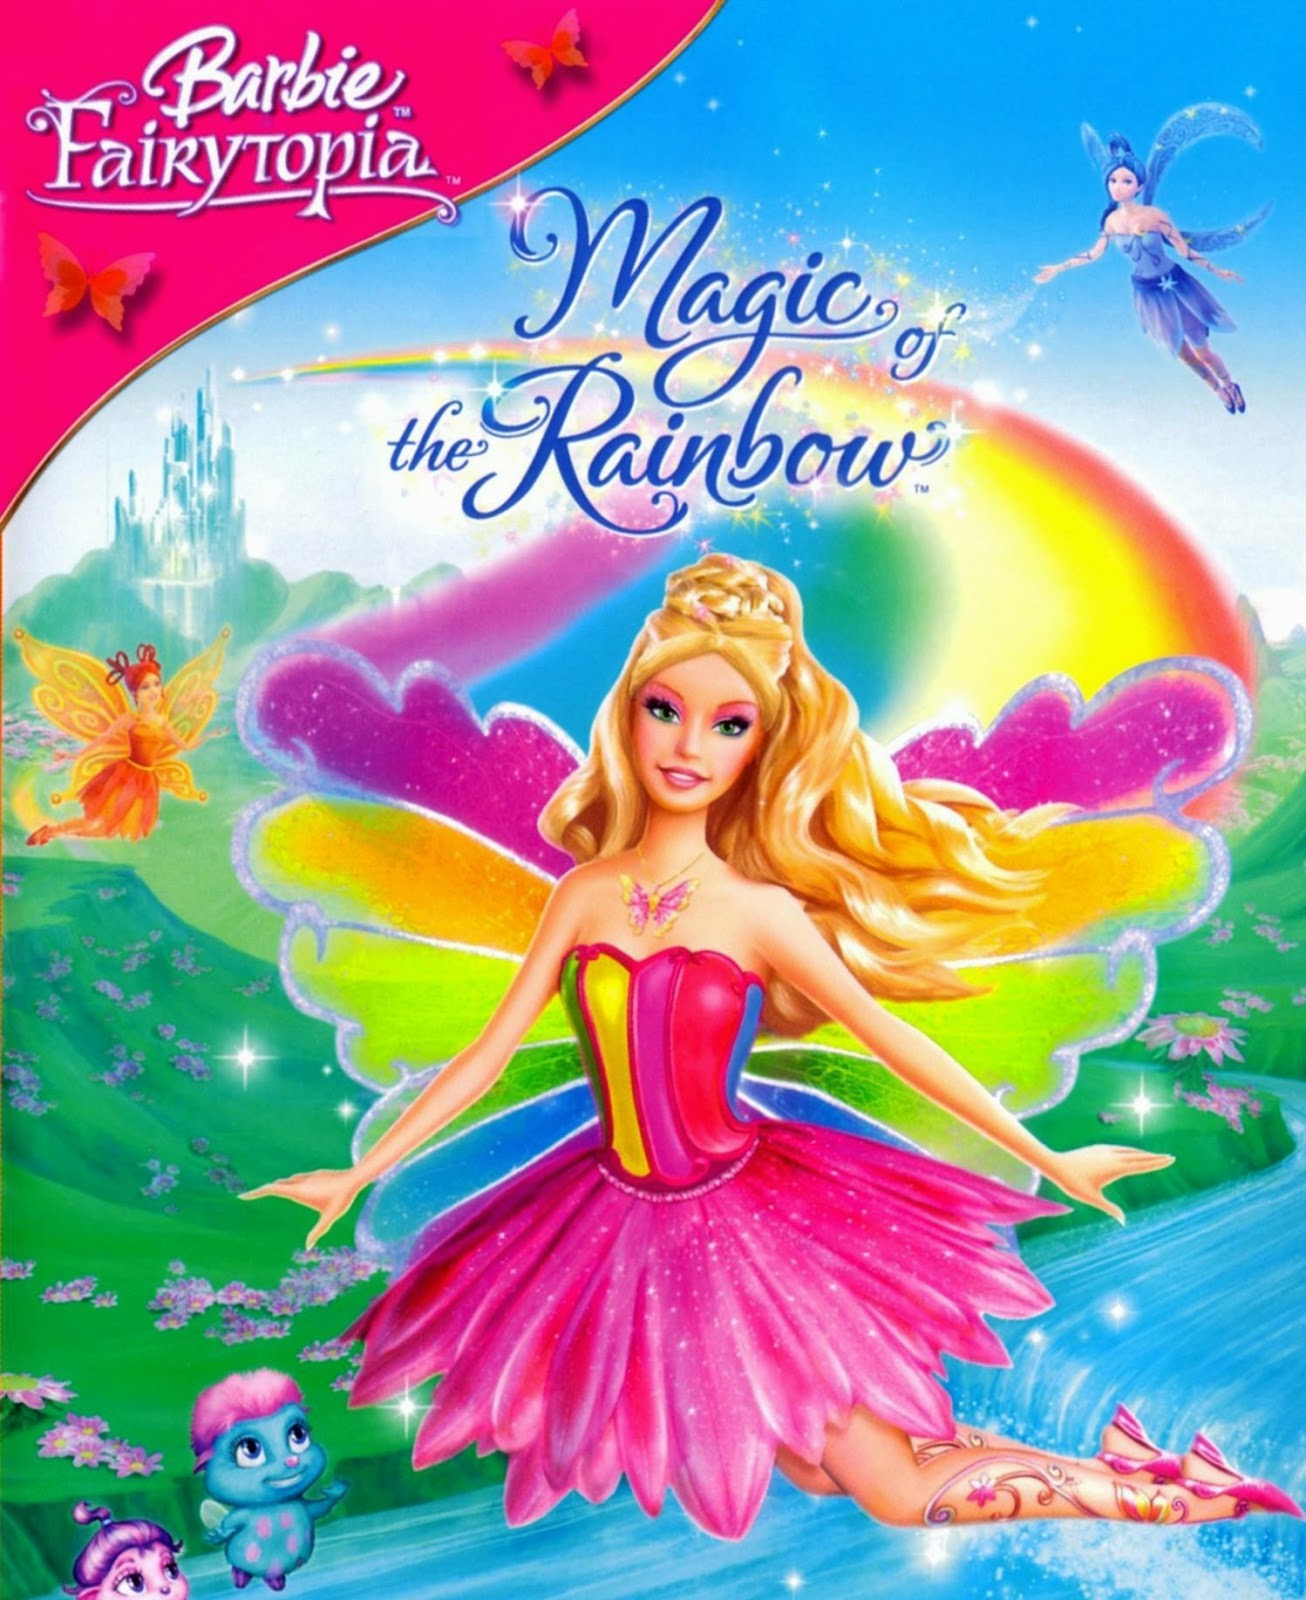 Watch Barbie Fairytopia: Magic of the Rainbow (2007) Full Movie Online